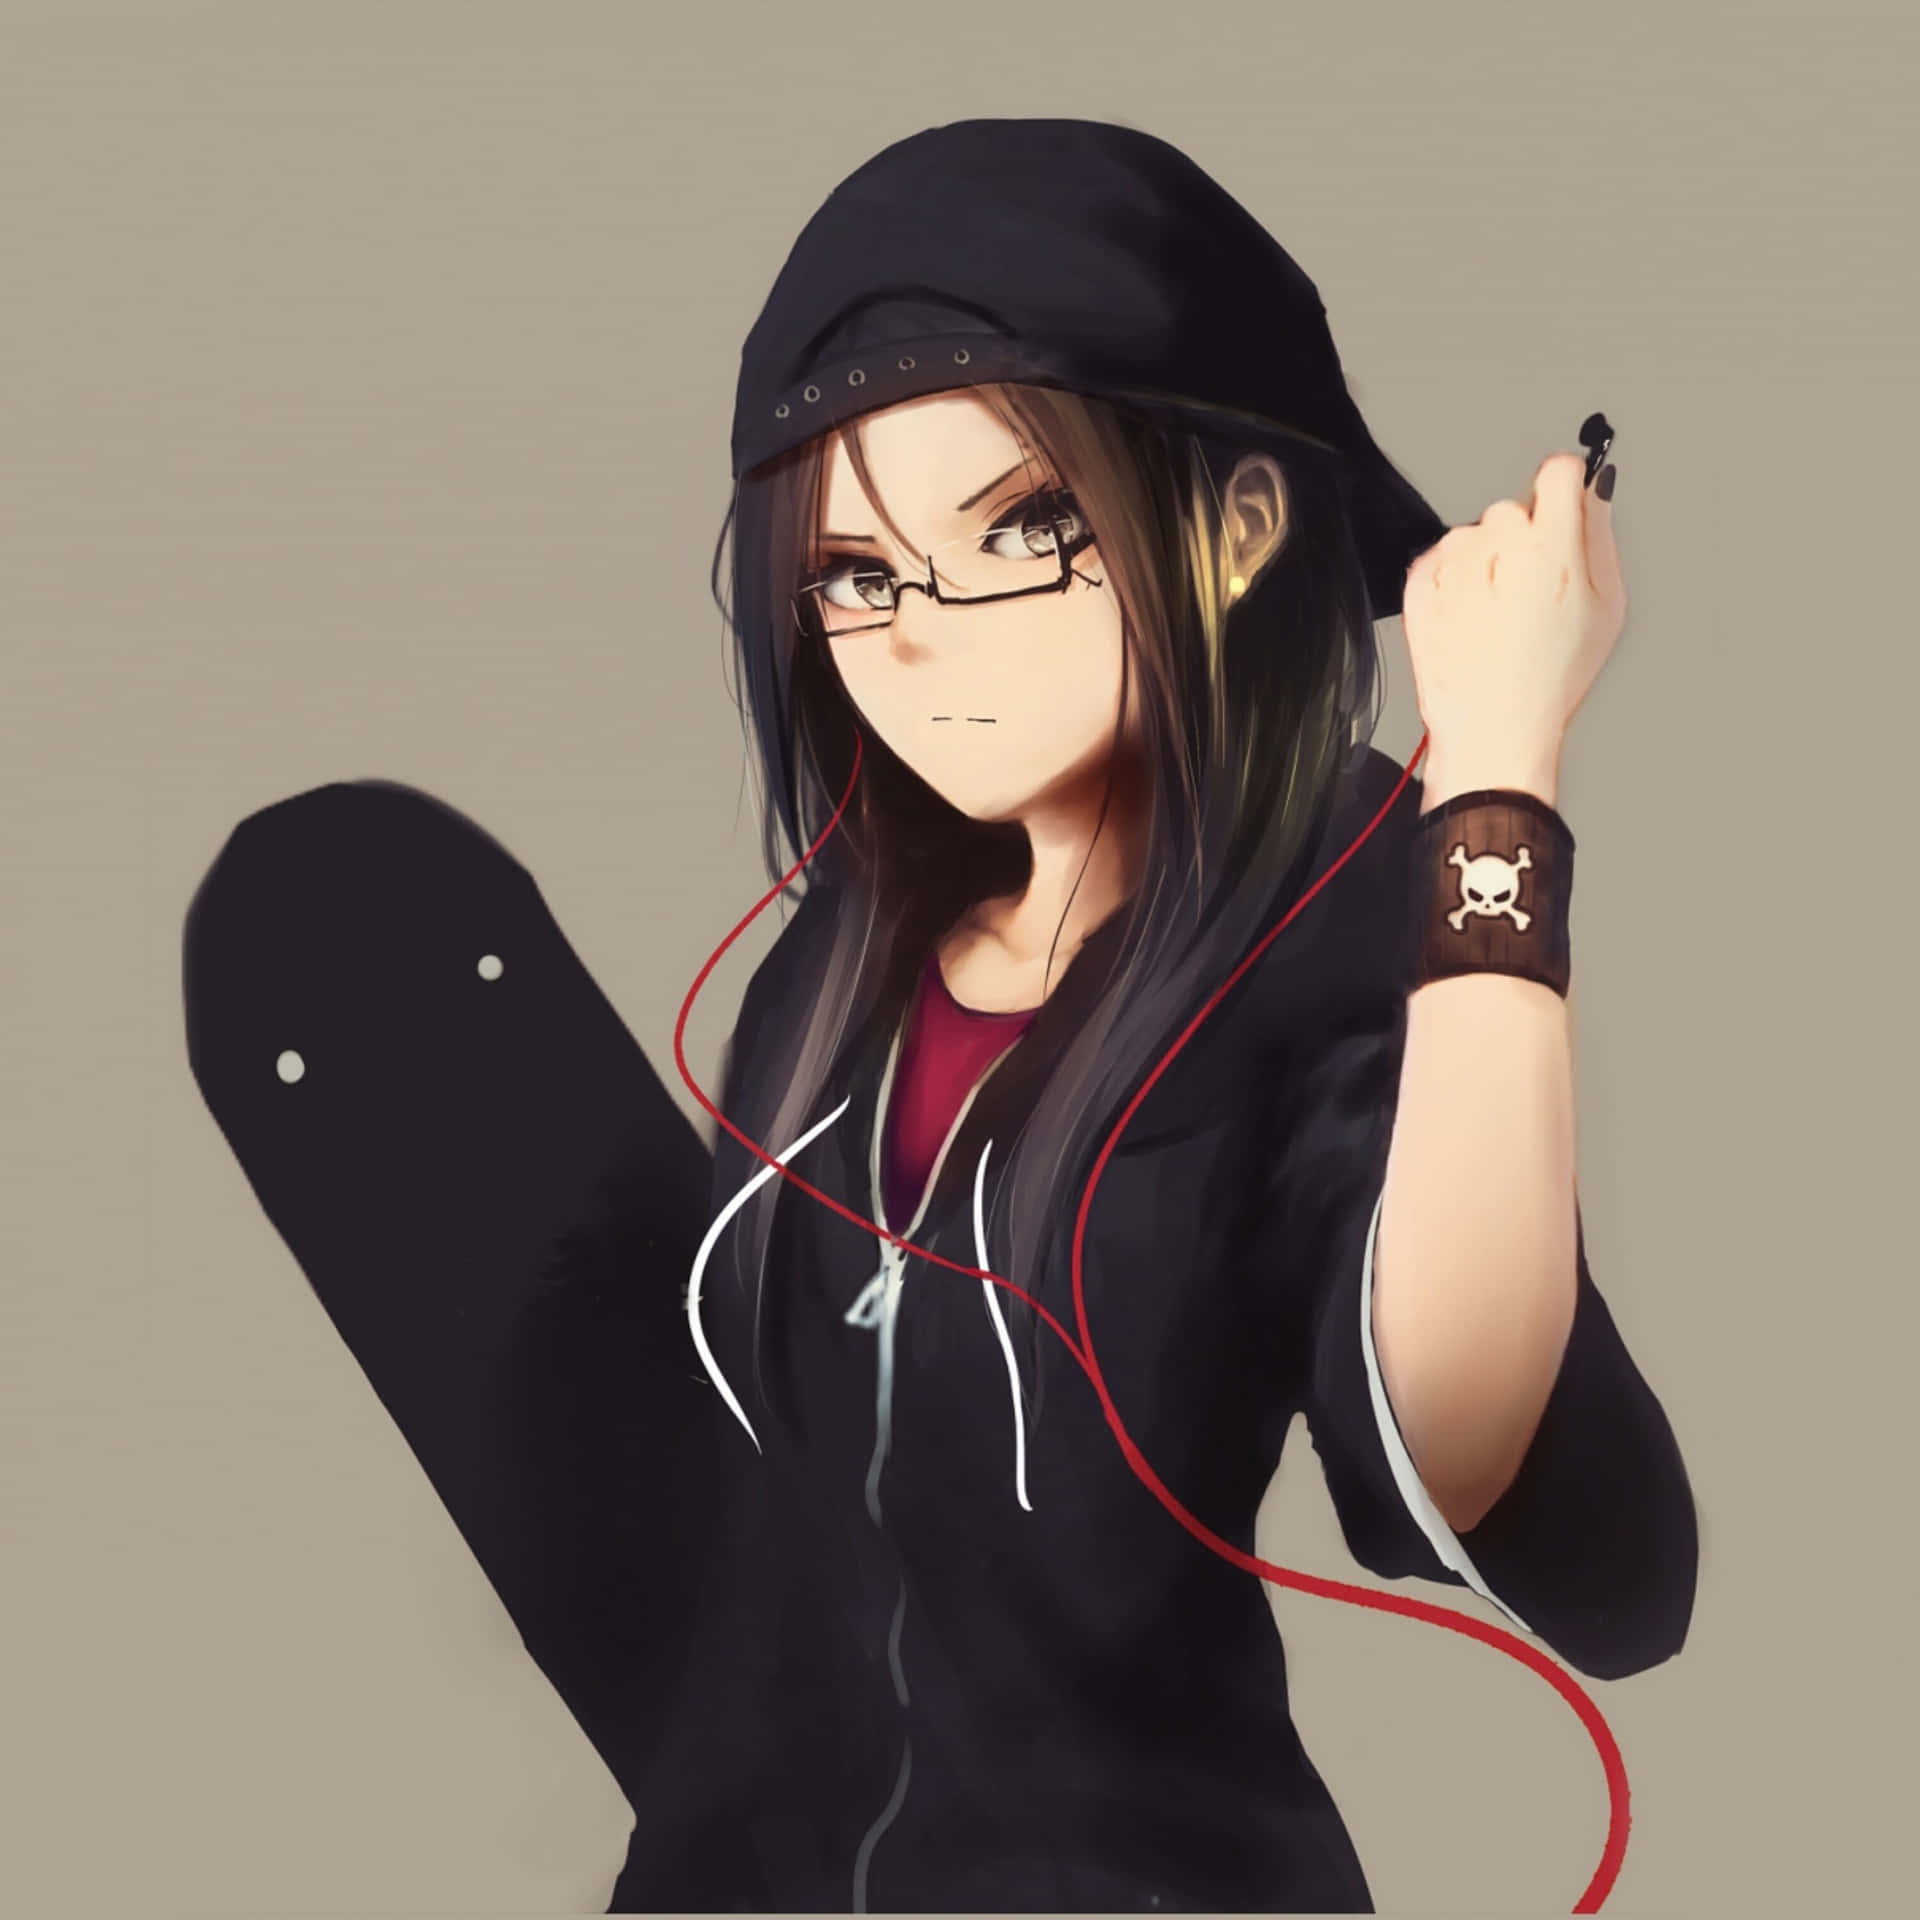 Cool Anime Girl [wallpaper] Background